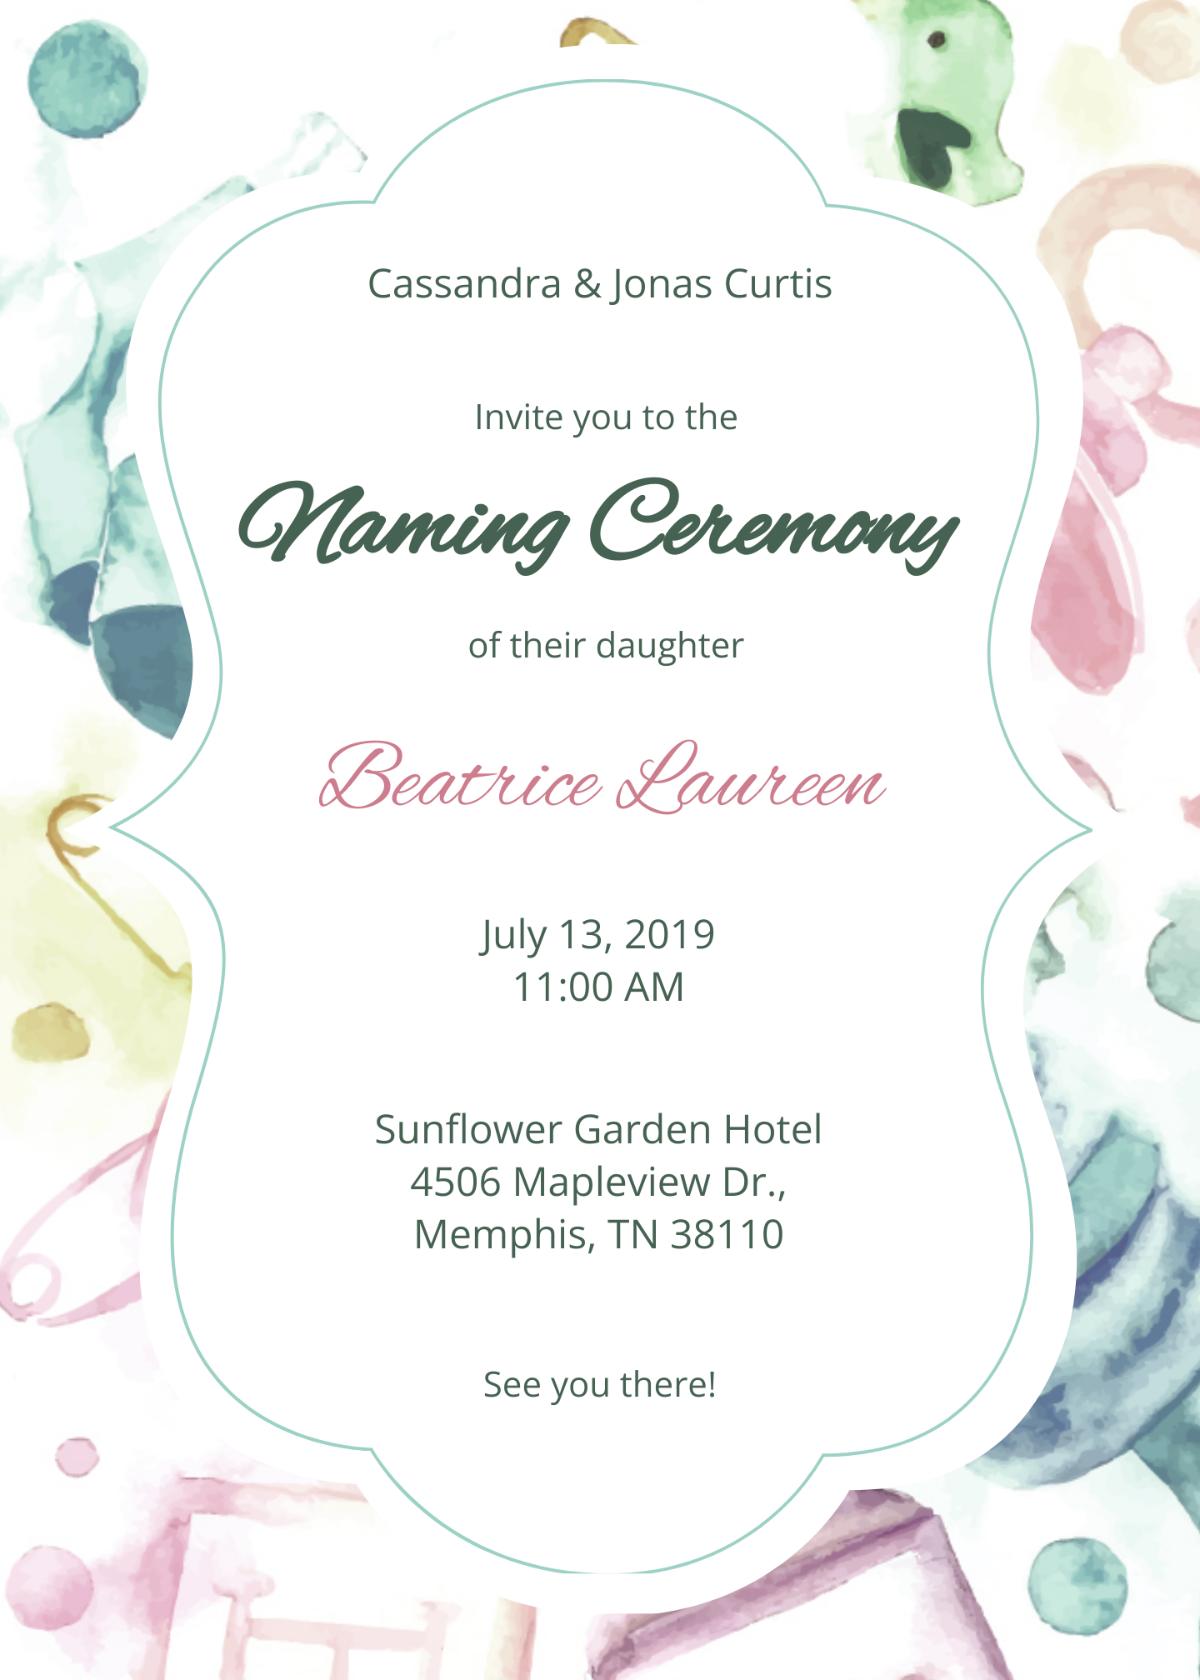 Naming Ceremony Invitation